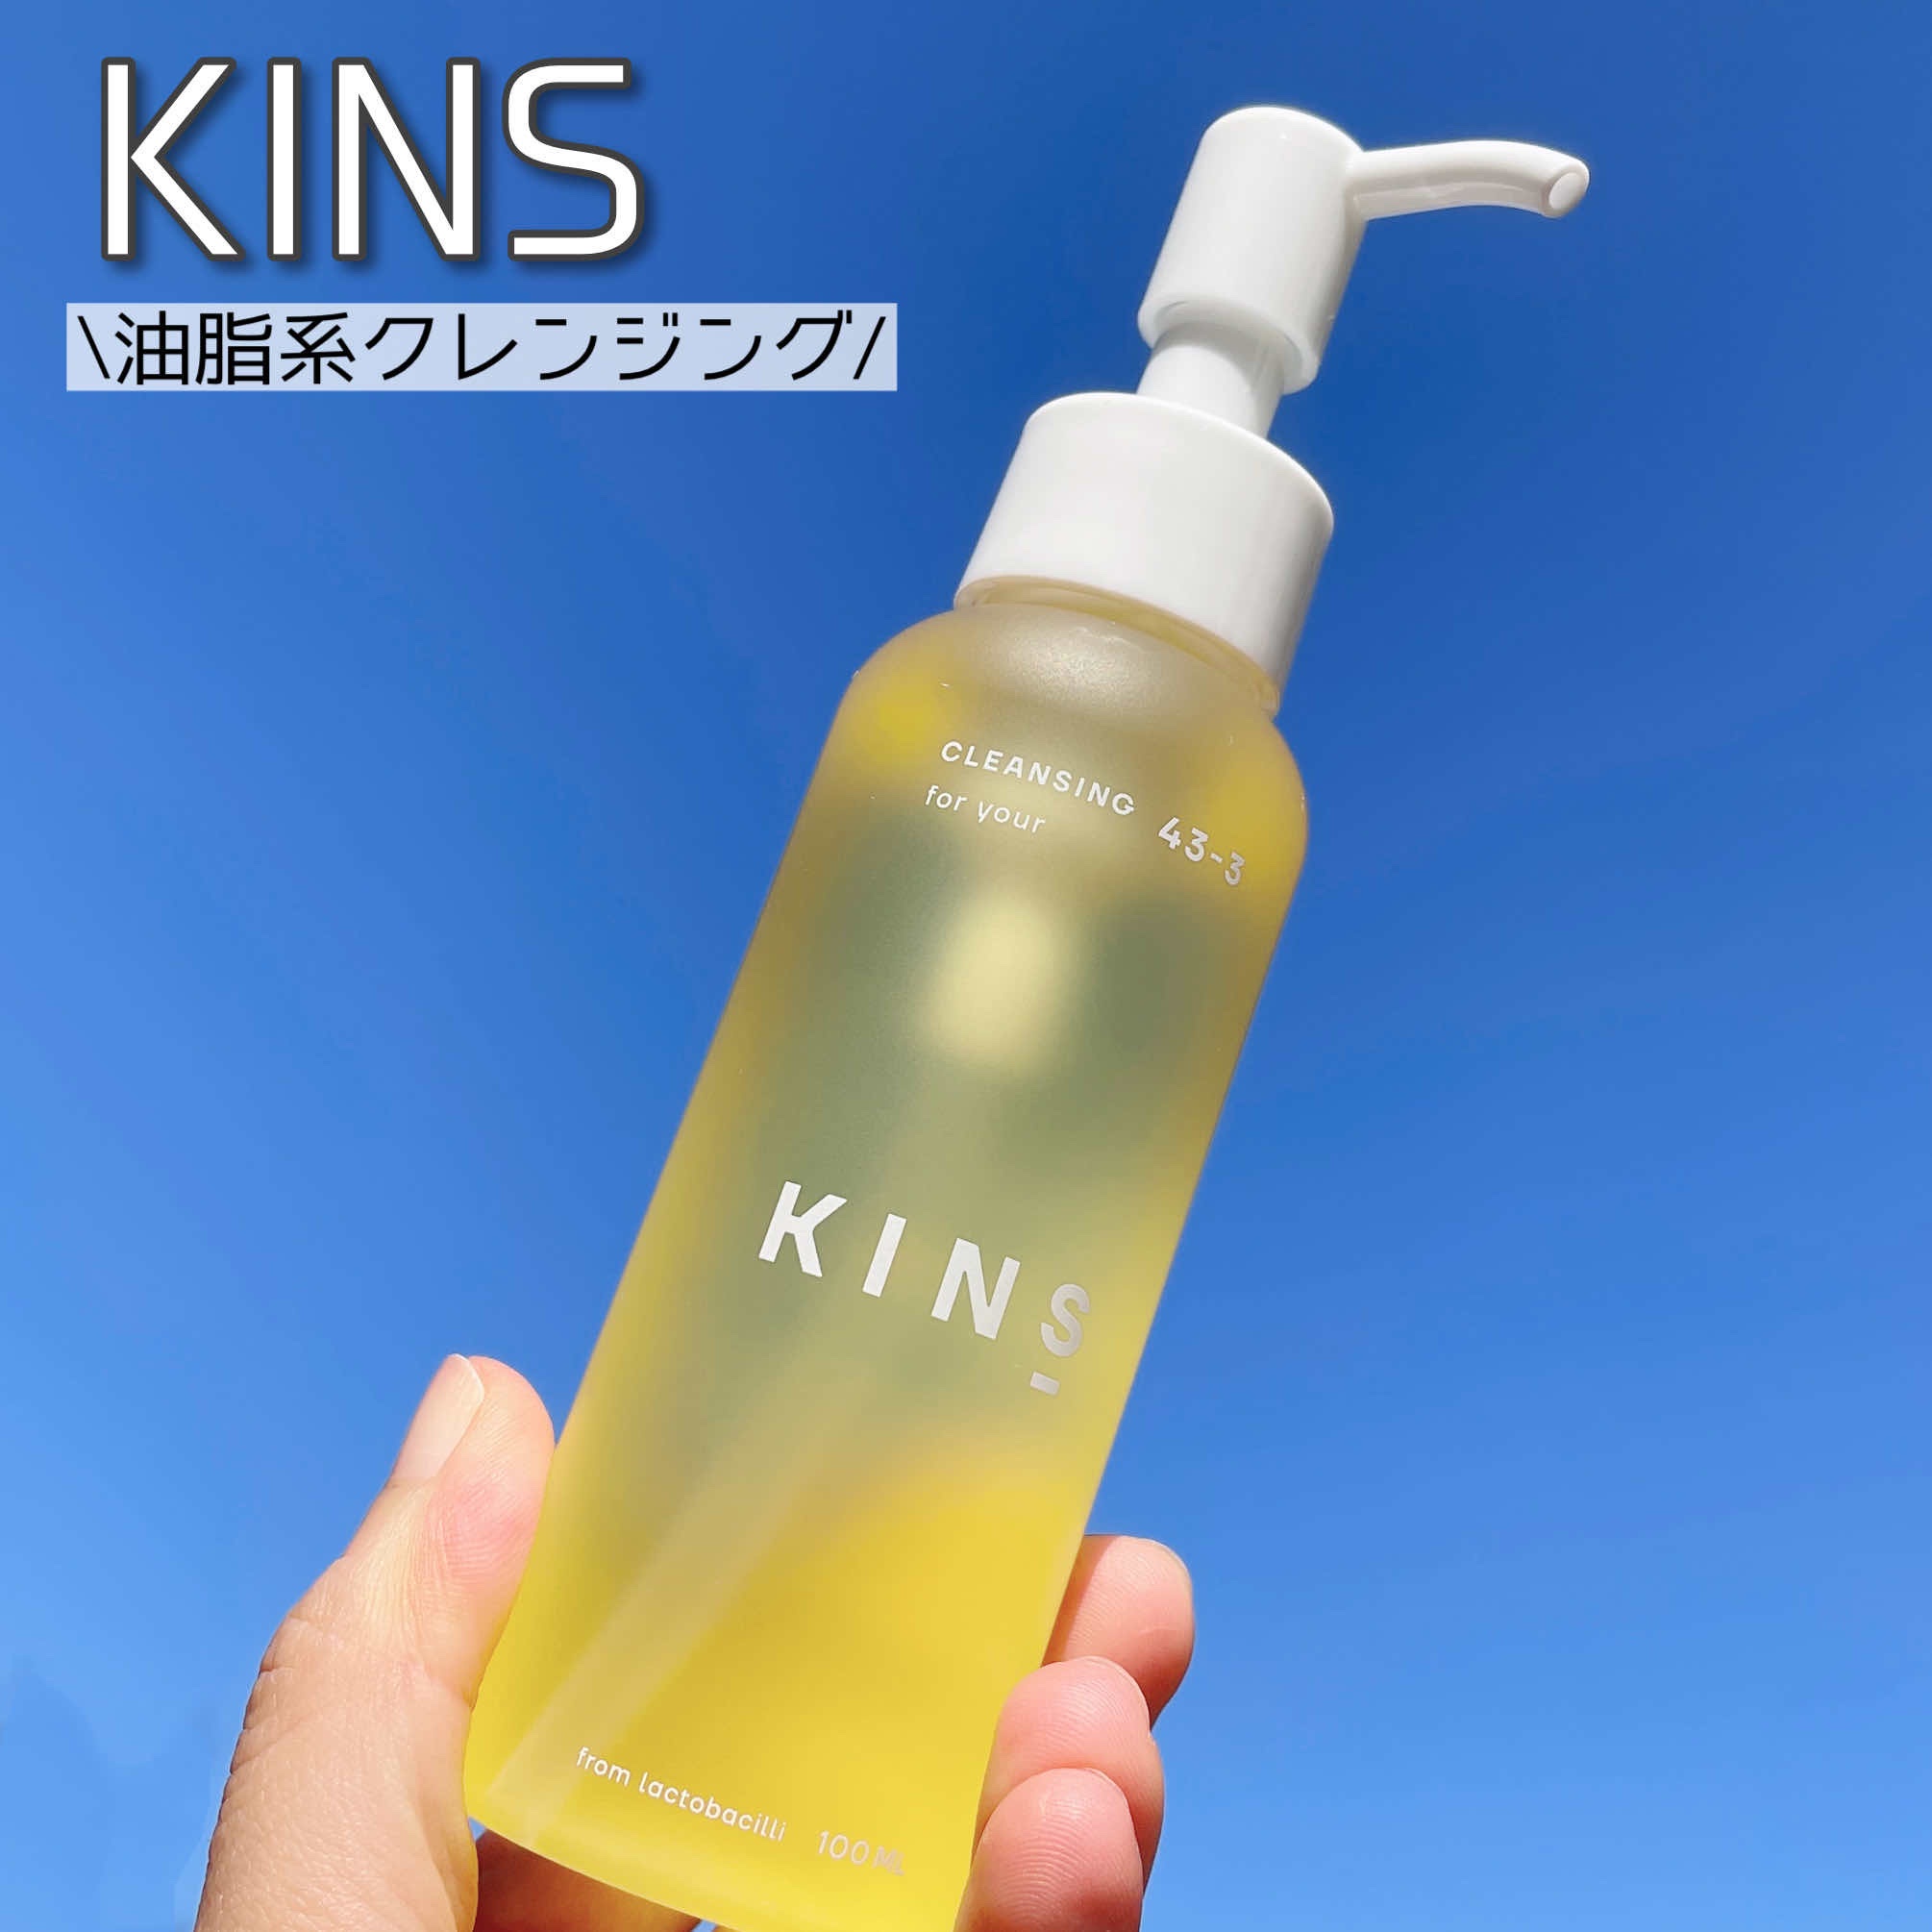 KINS クレンジングオイル 100ml リフィル - 基礎化粧品